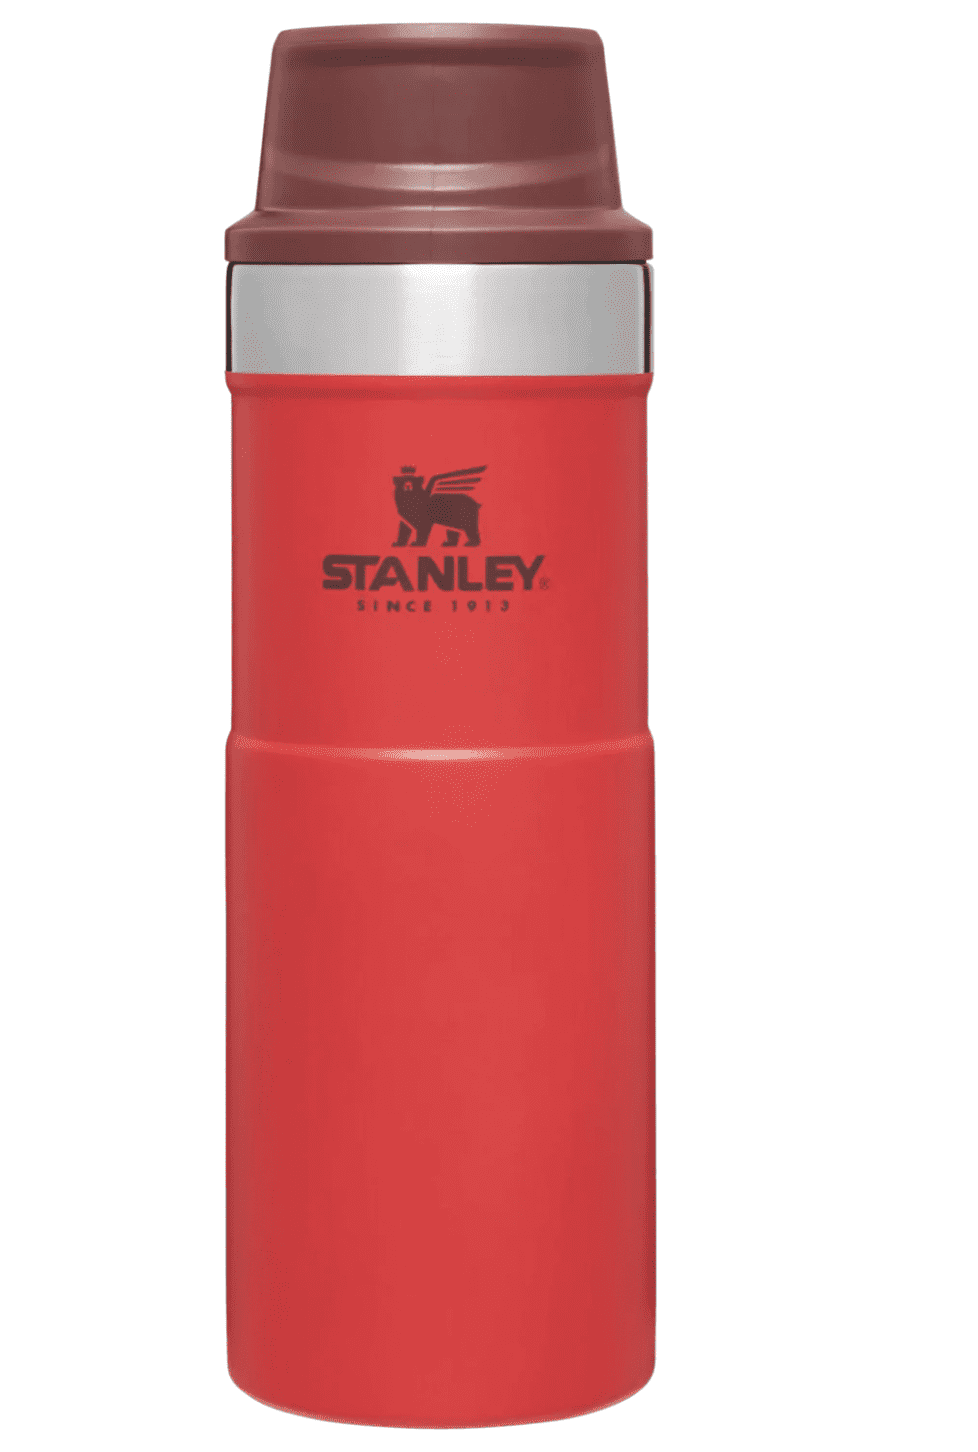 Marketing Stanley Trigger-Action Travel Mugs (16 Oz.)